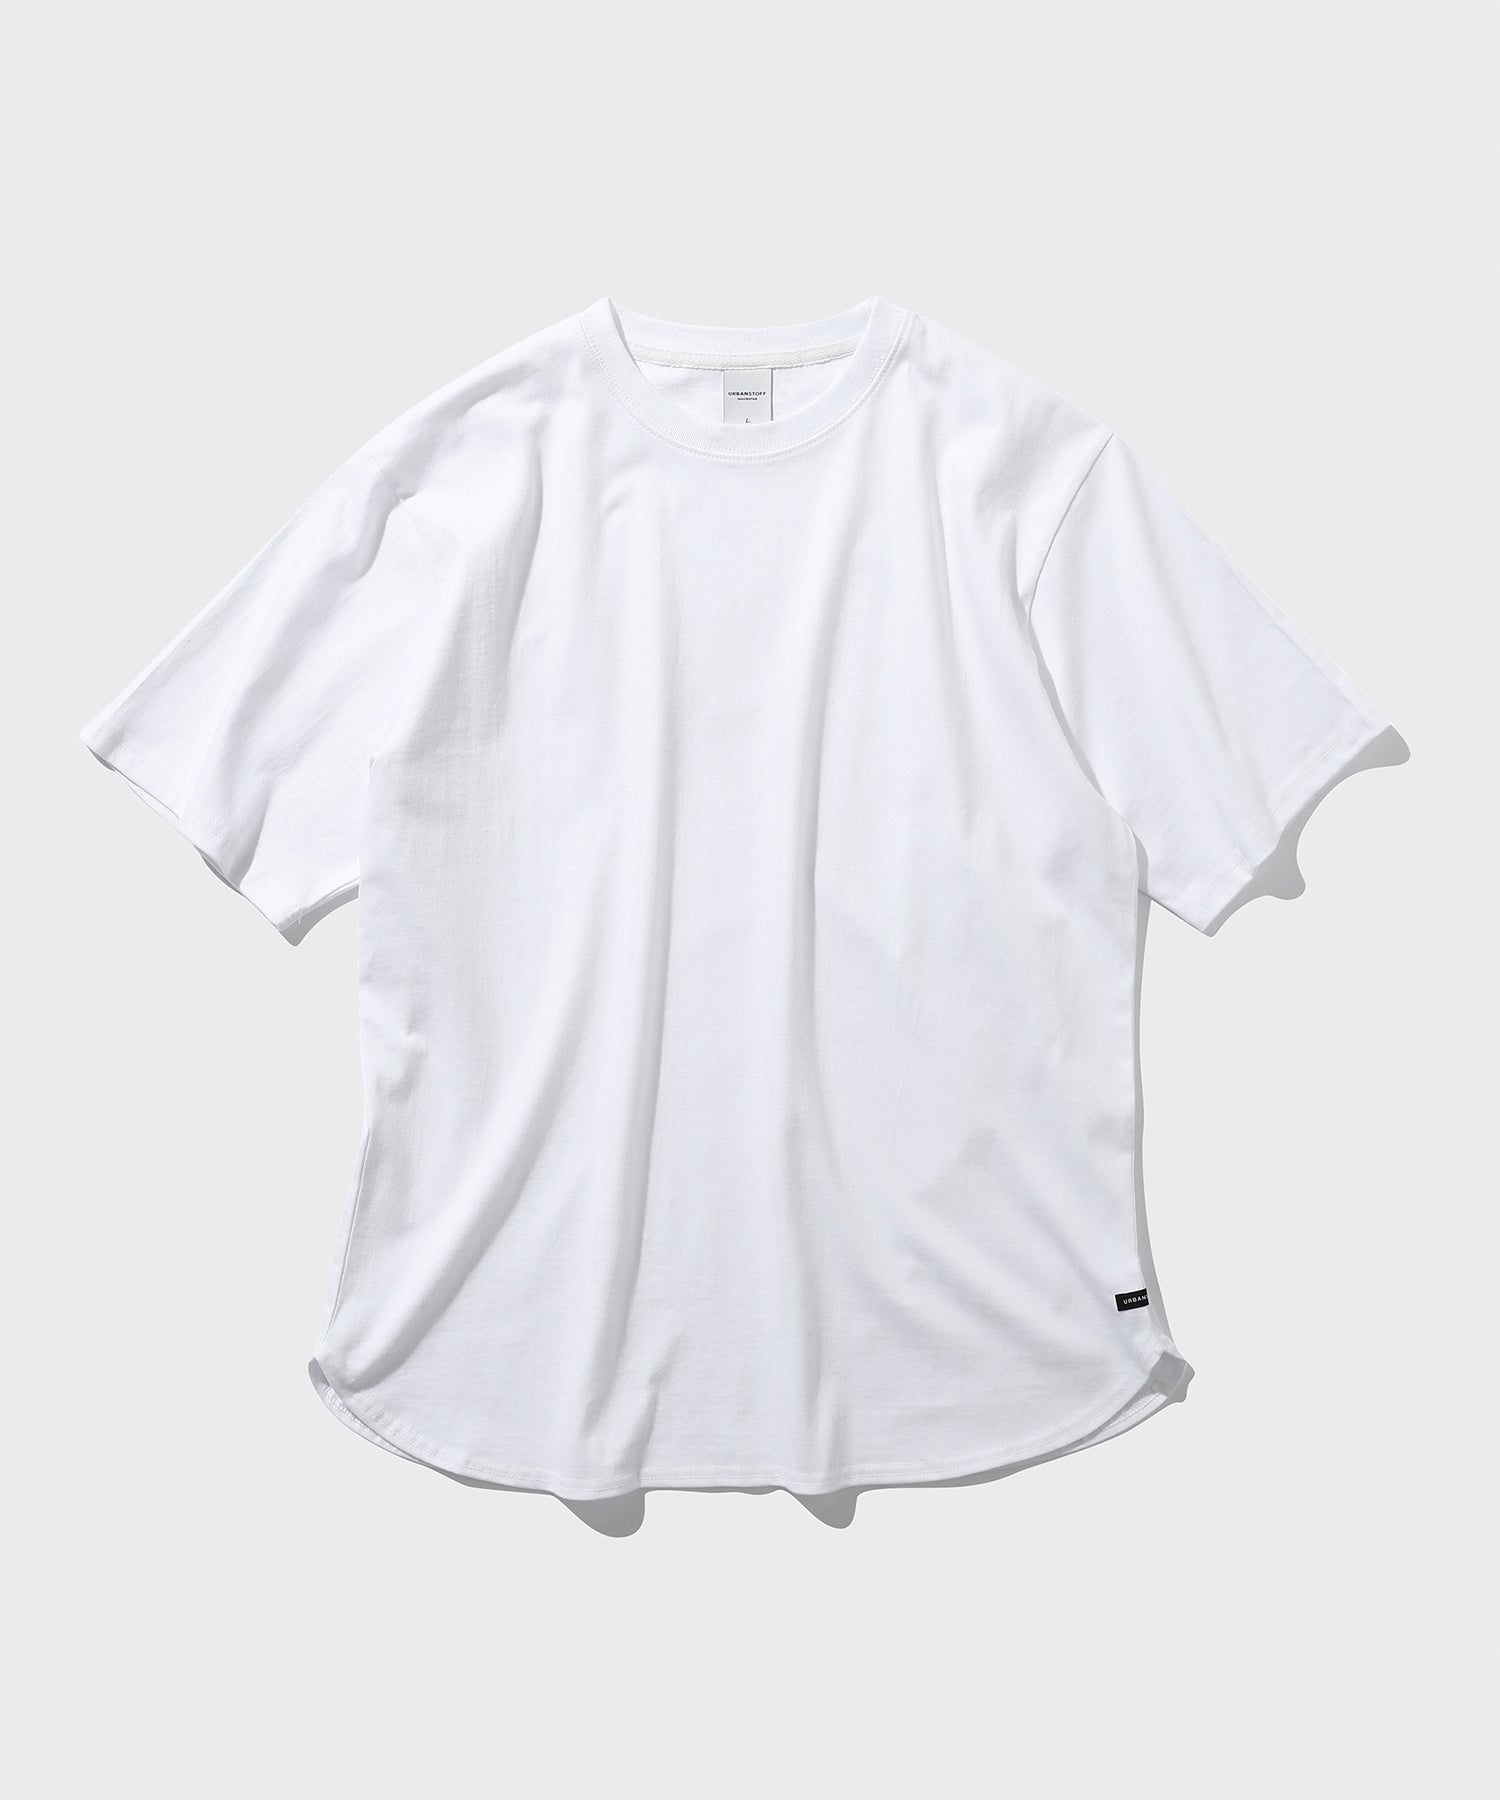 Layered Length Tshirts (White)